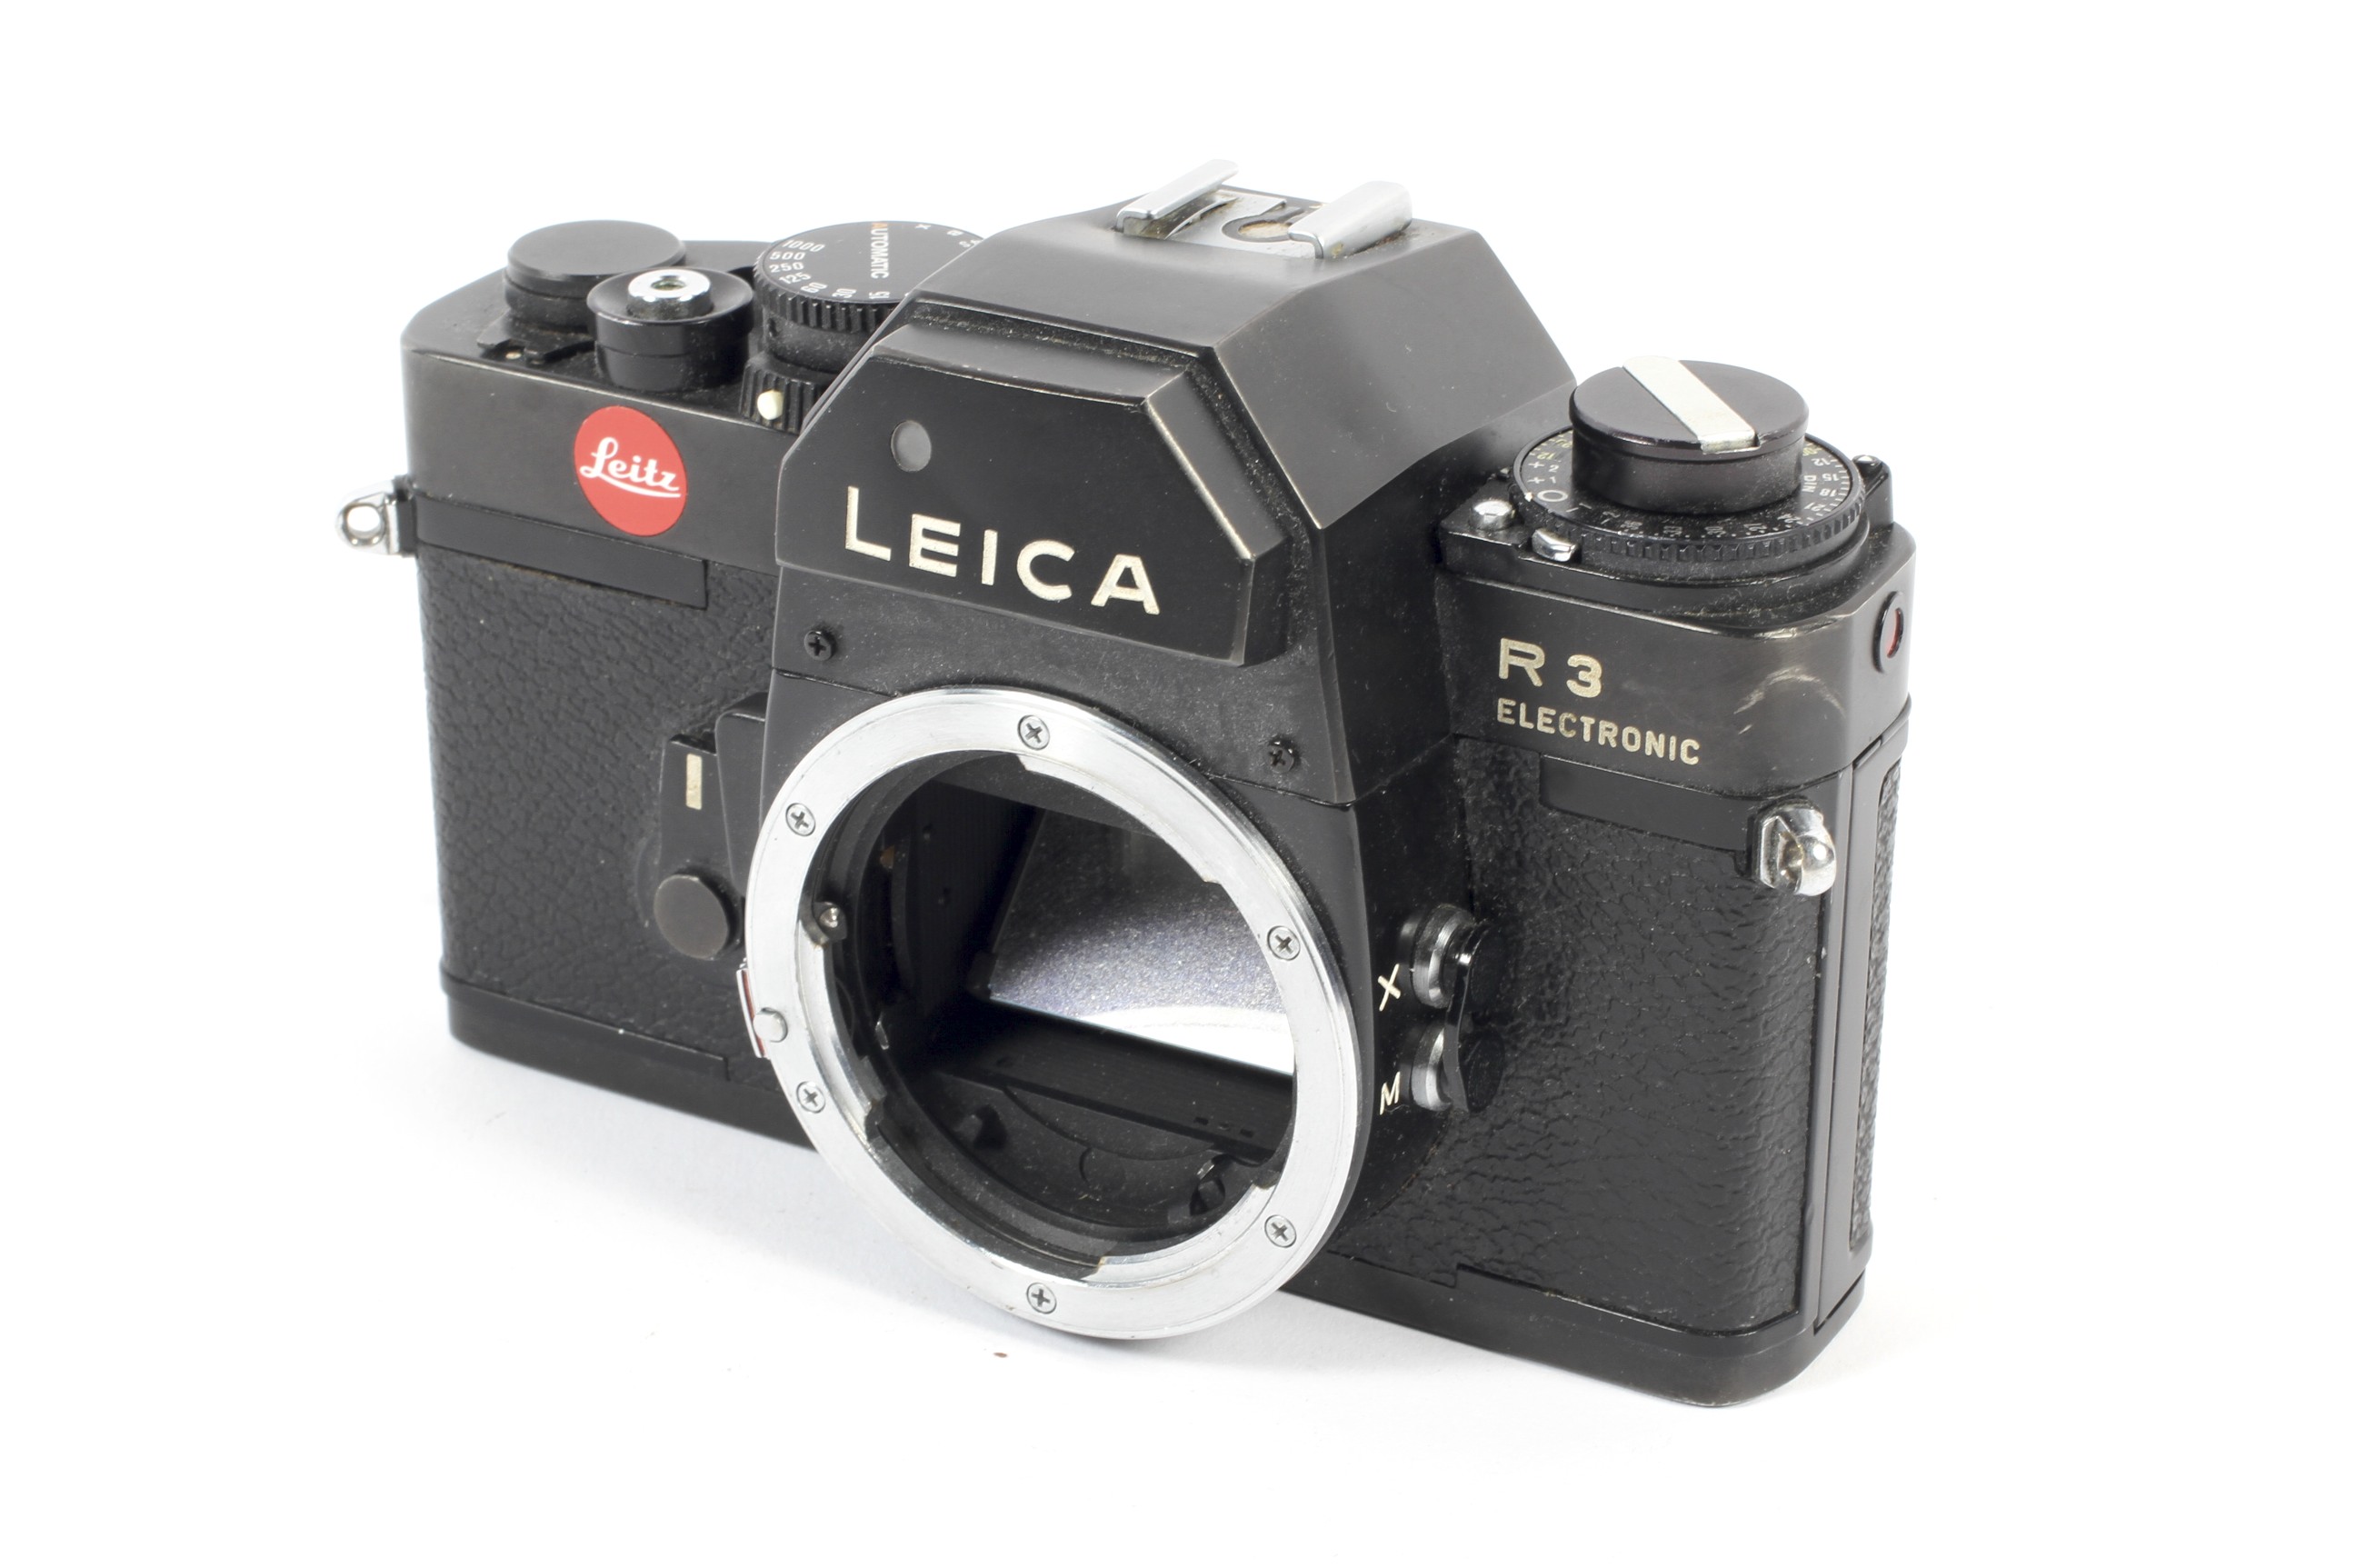 A black Leica R3 electronic 35mm SLR camera body.